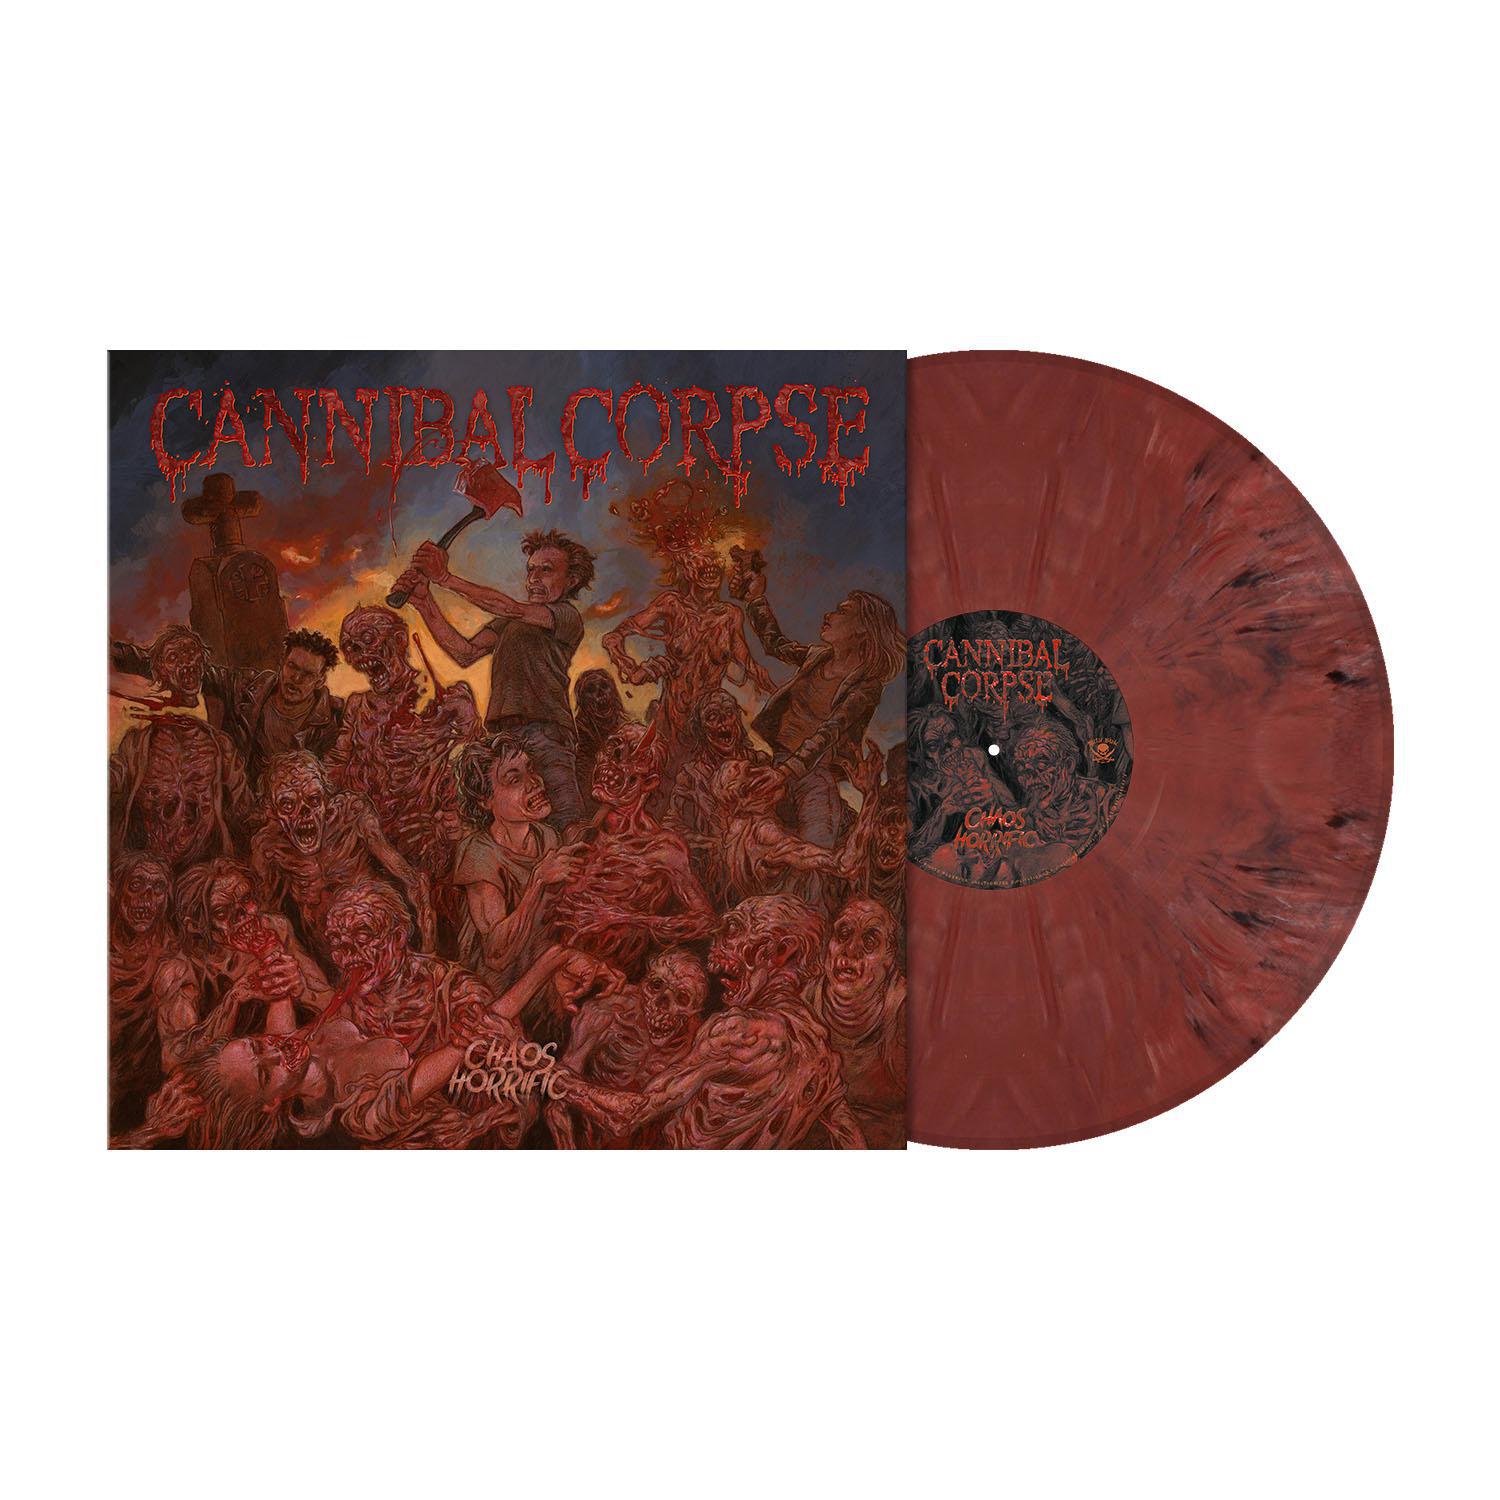 Cannibal Corpse - Chaos Horrific (Vinyl) (burned marbled) flesh 